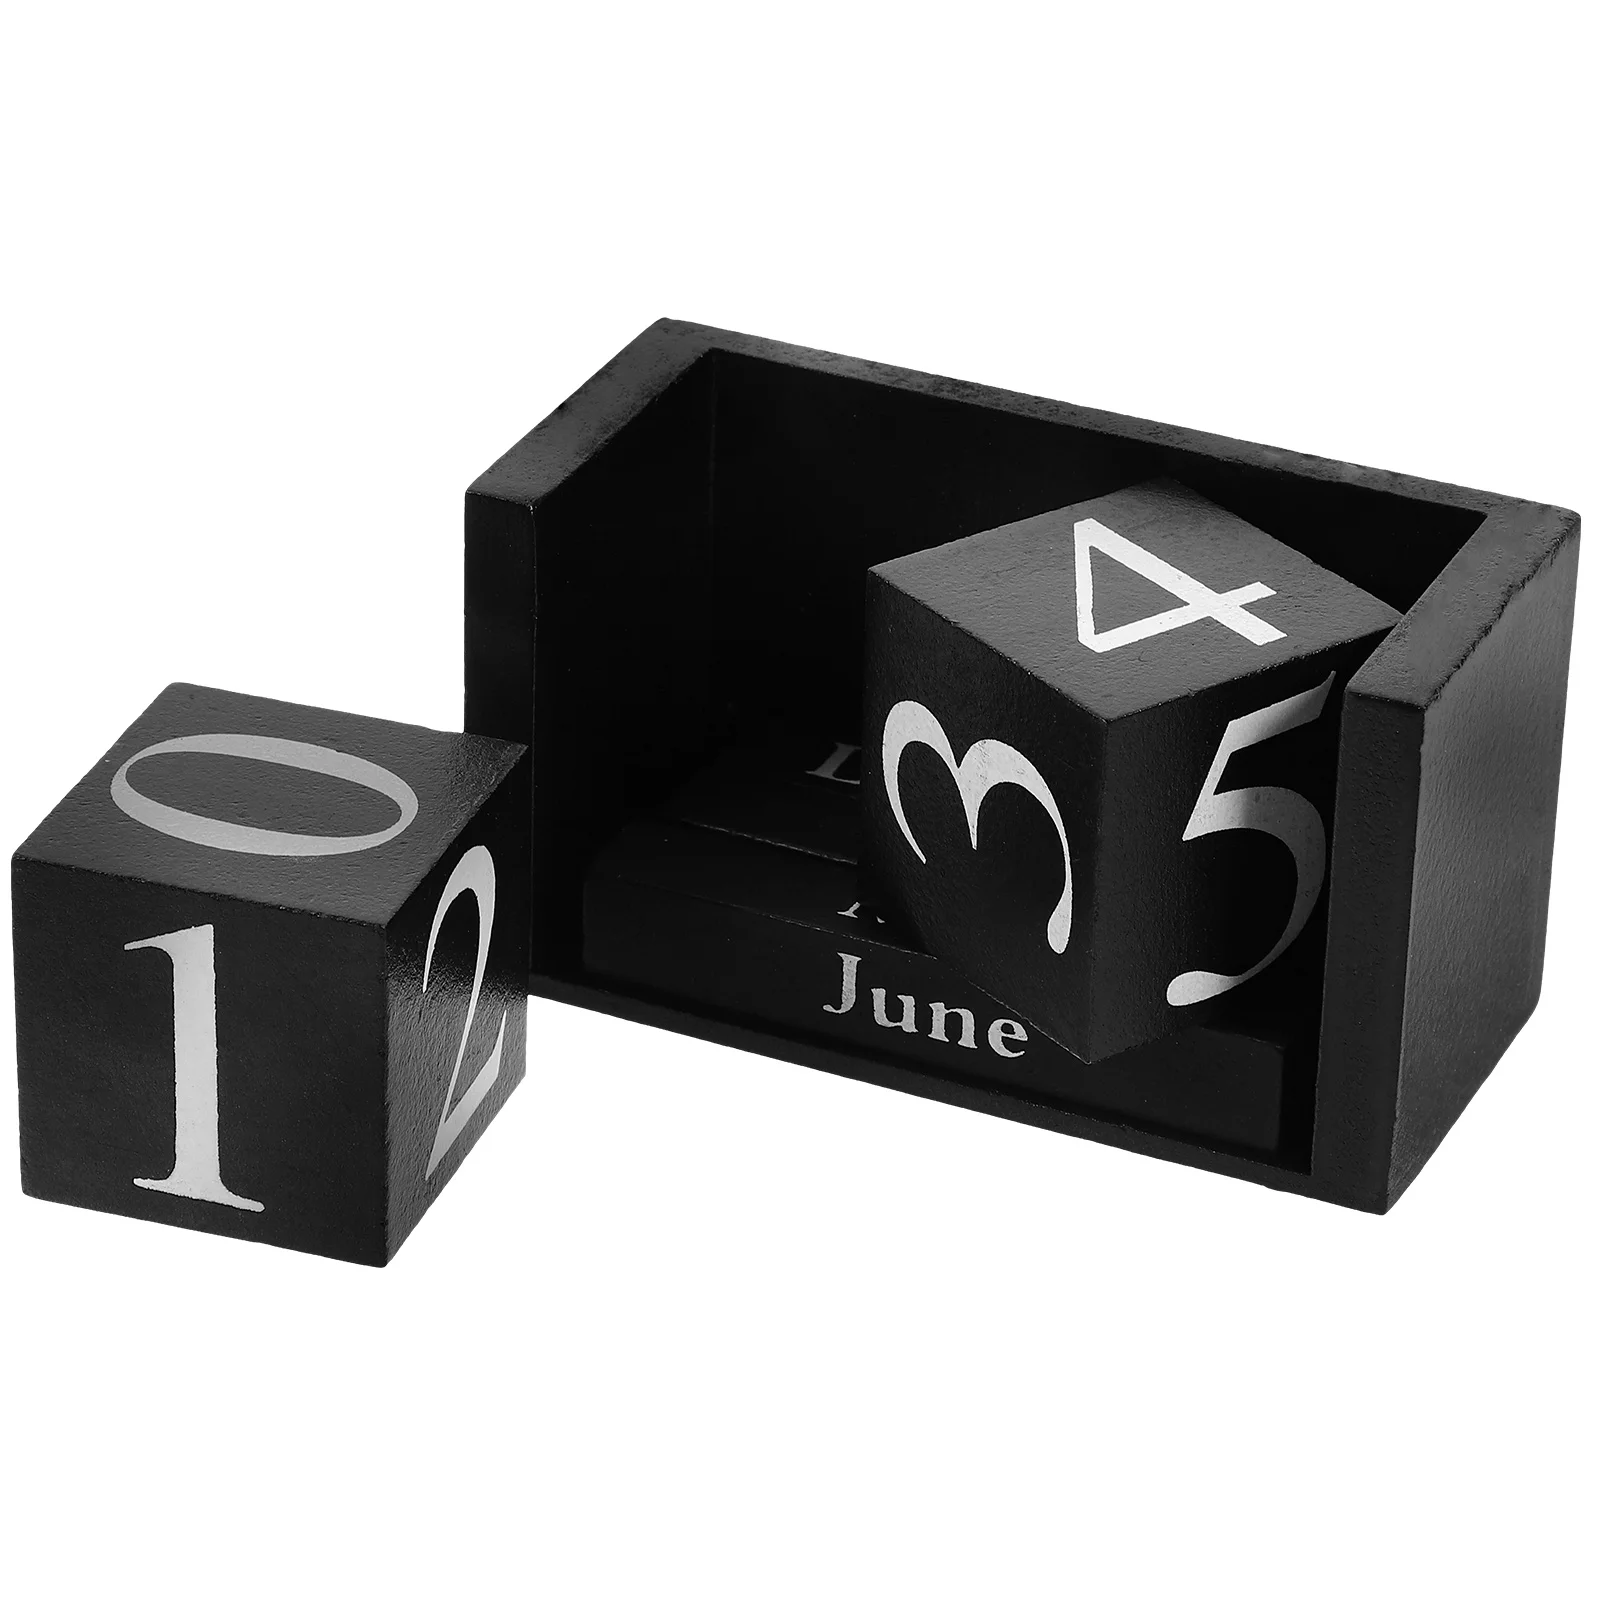 

Wooden Perpetual Calendar Eternal Blocks Month Date Display Desktop Accessories Photography Props Home Office Decor Ornaments